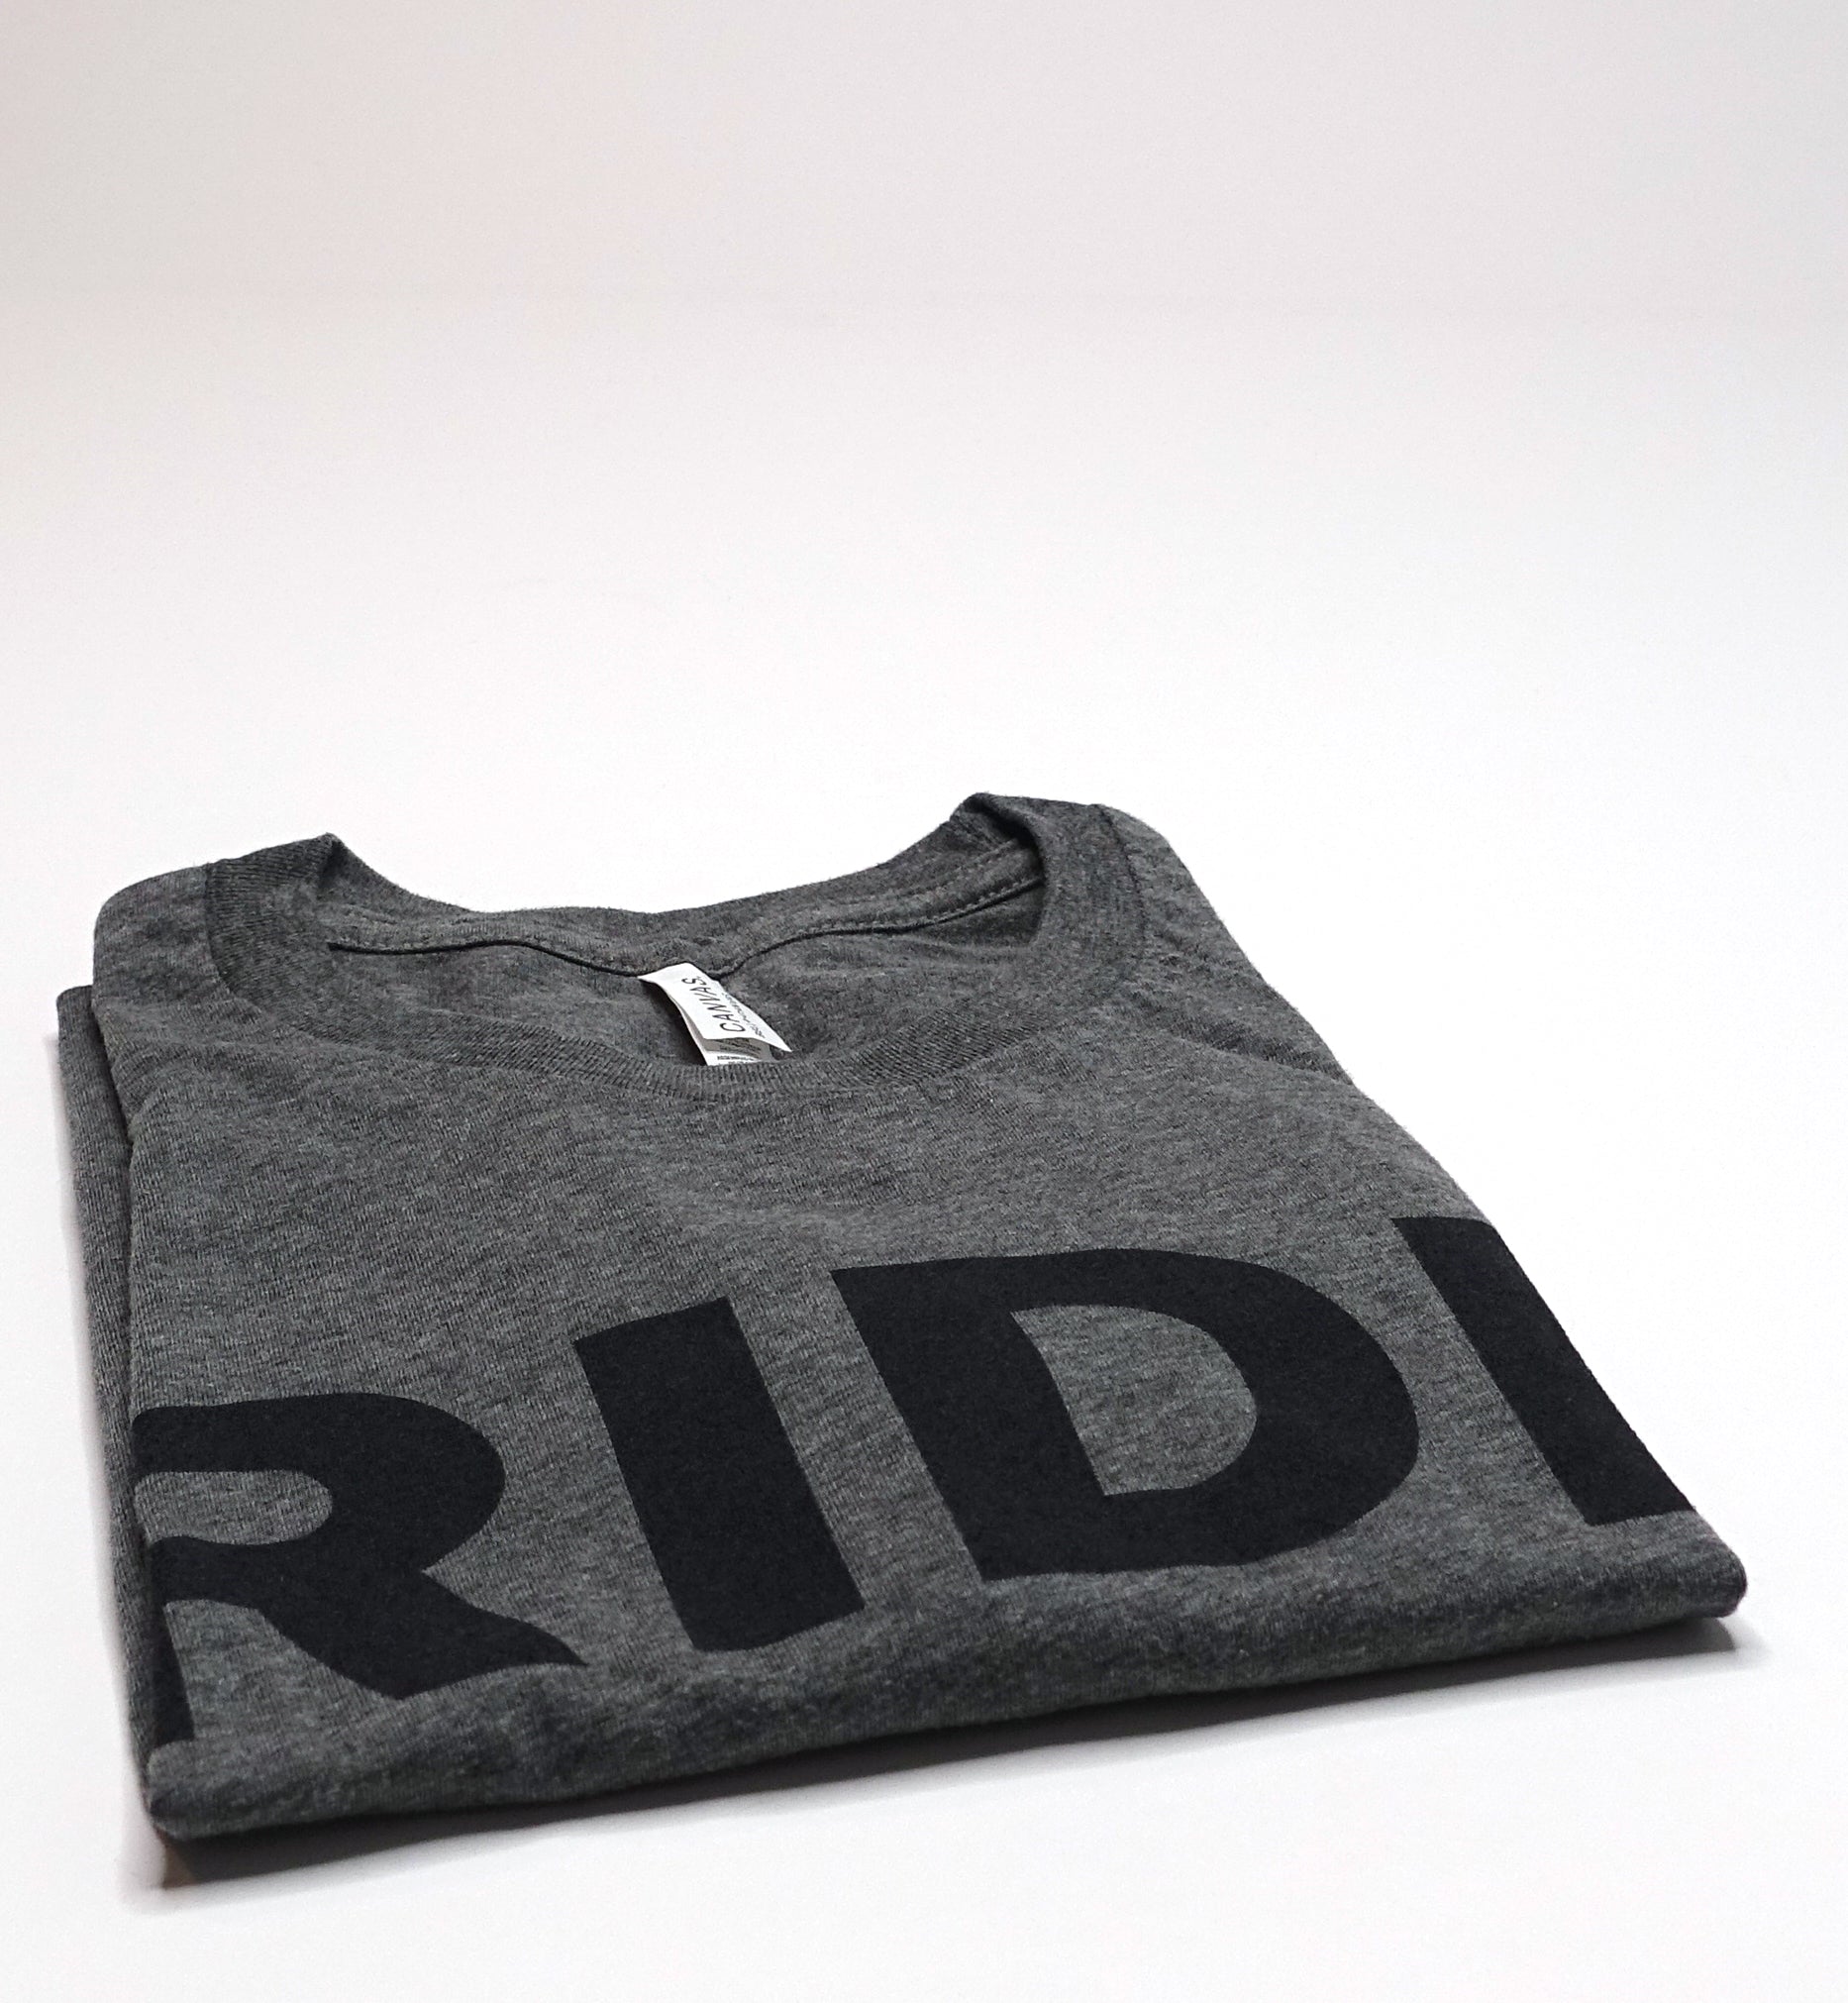 Ride - Logo 2015 US Tour Shirt Size Small